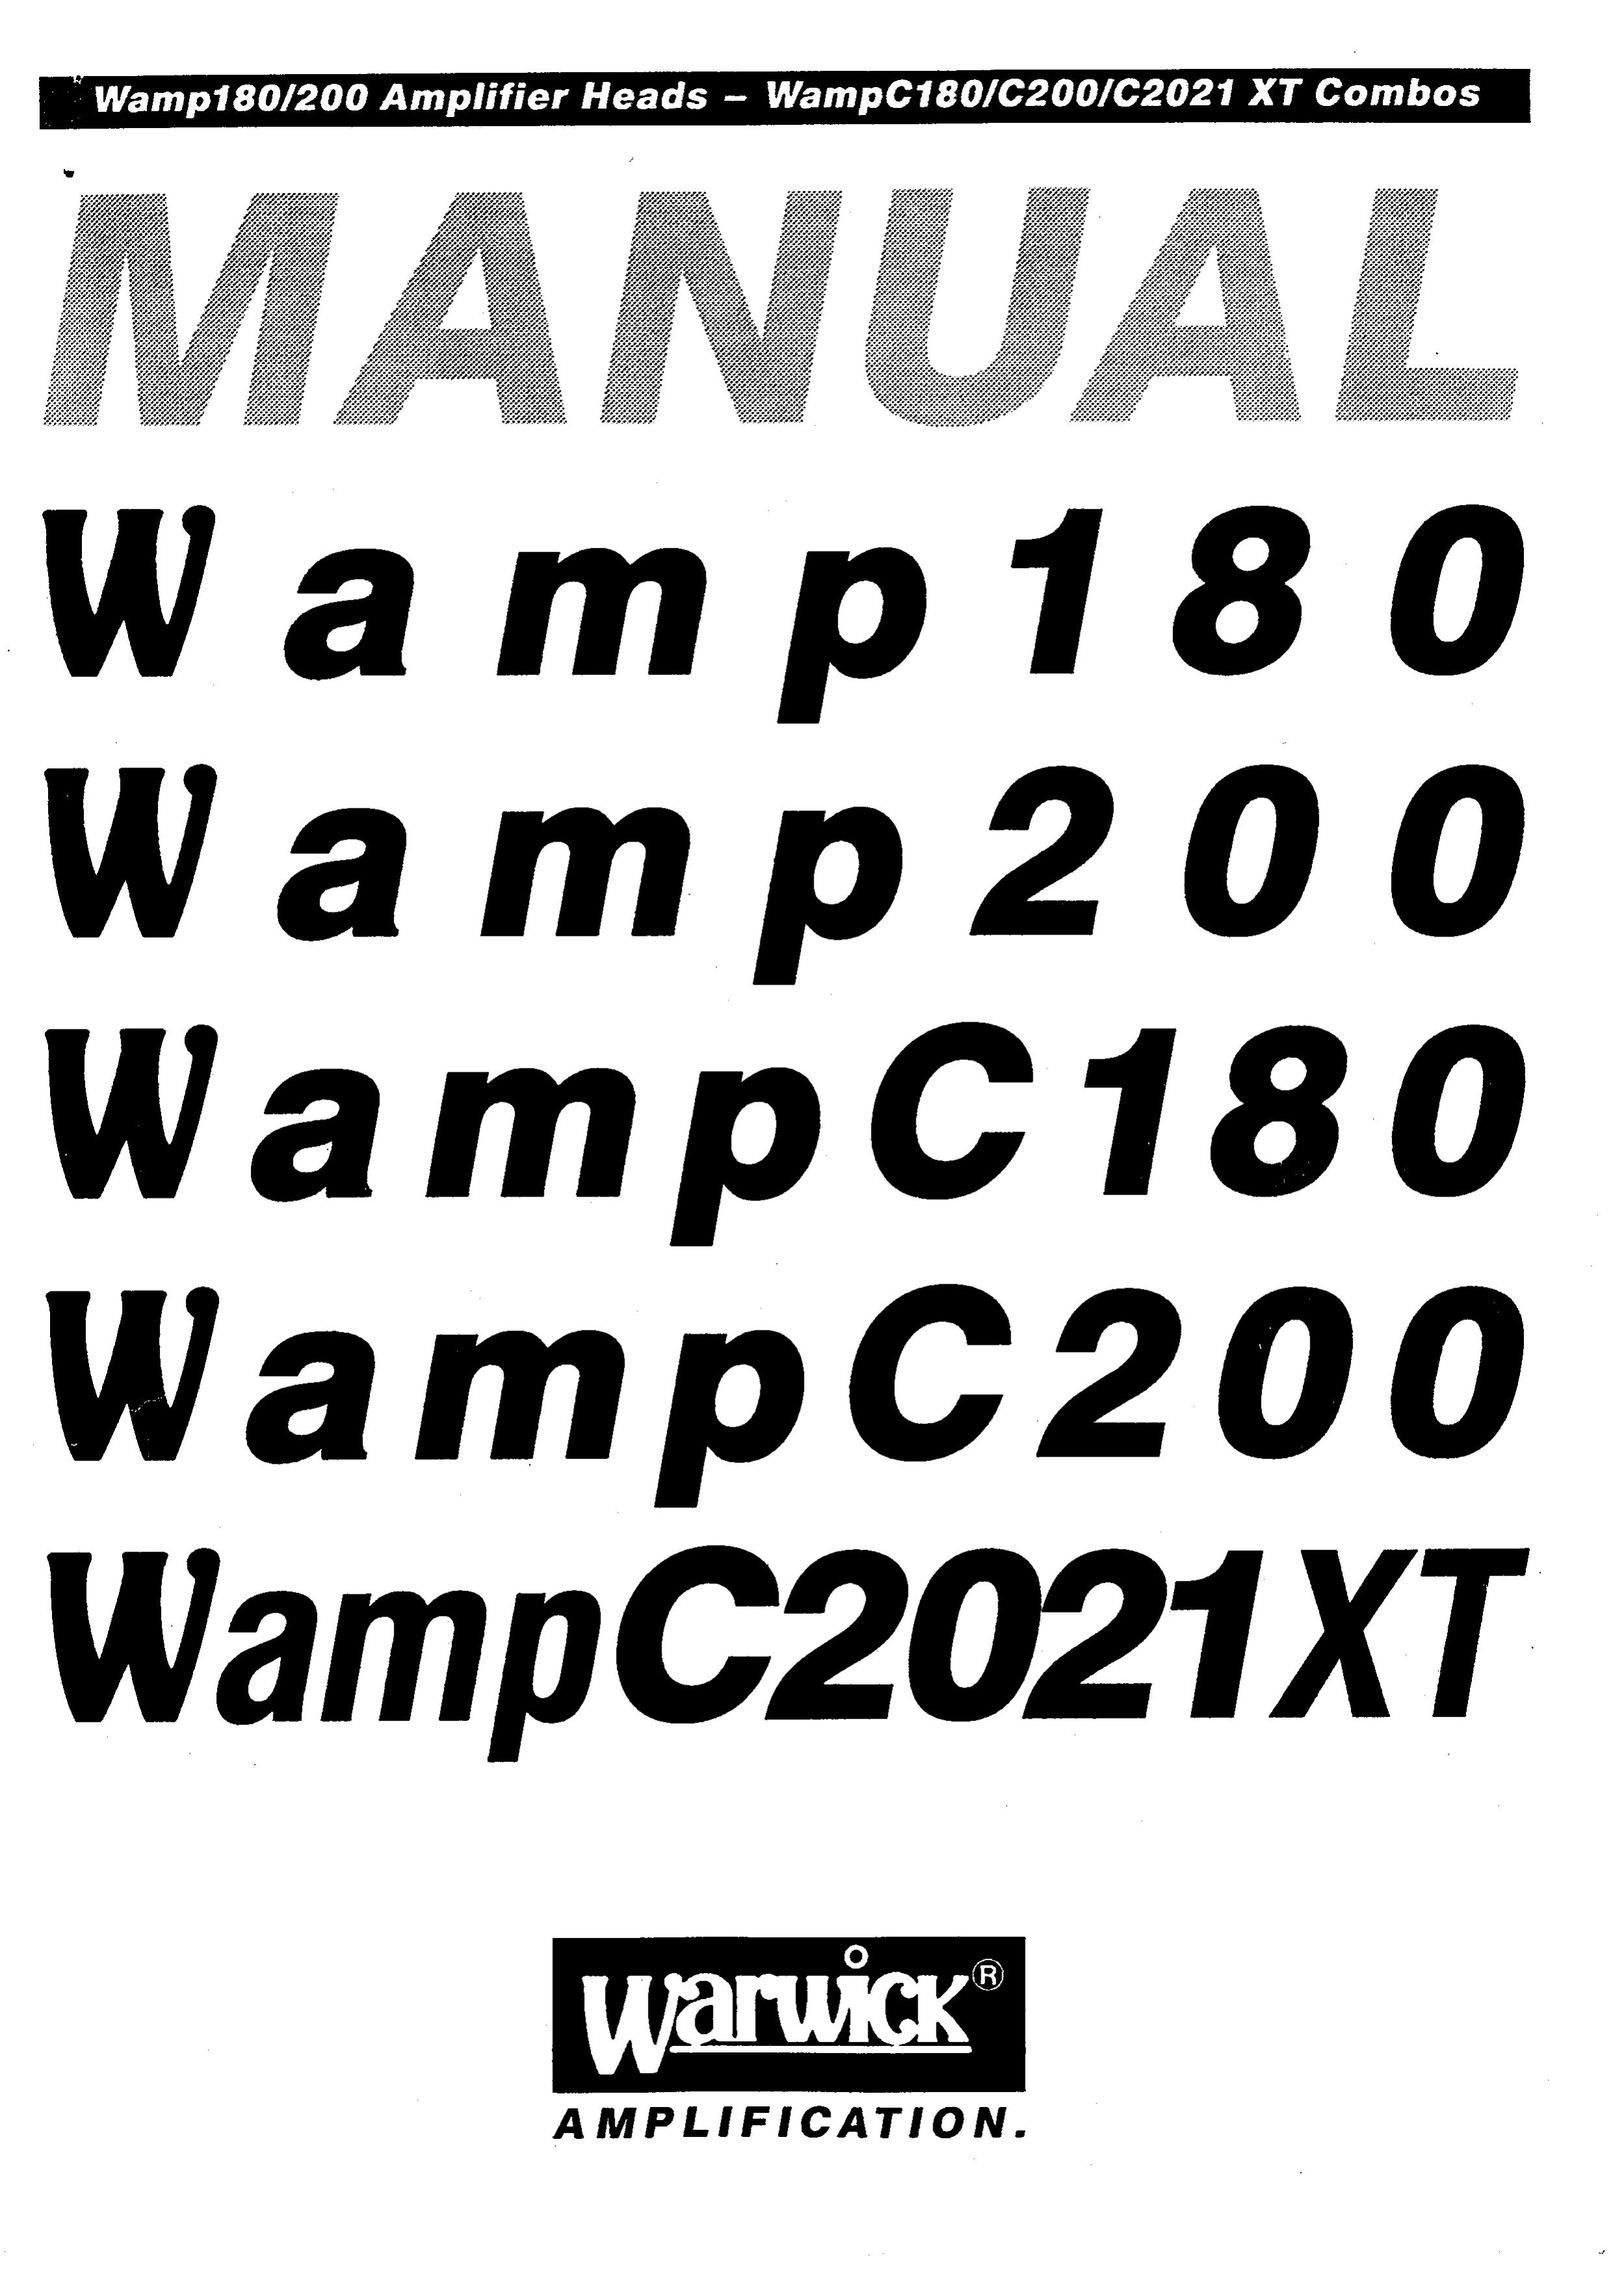 Warwick Wamp C2021 Stereo Amplifier User Manual